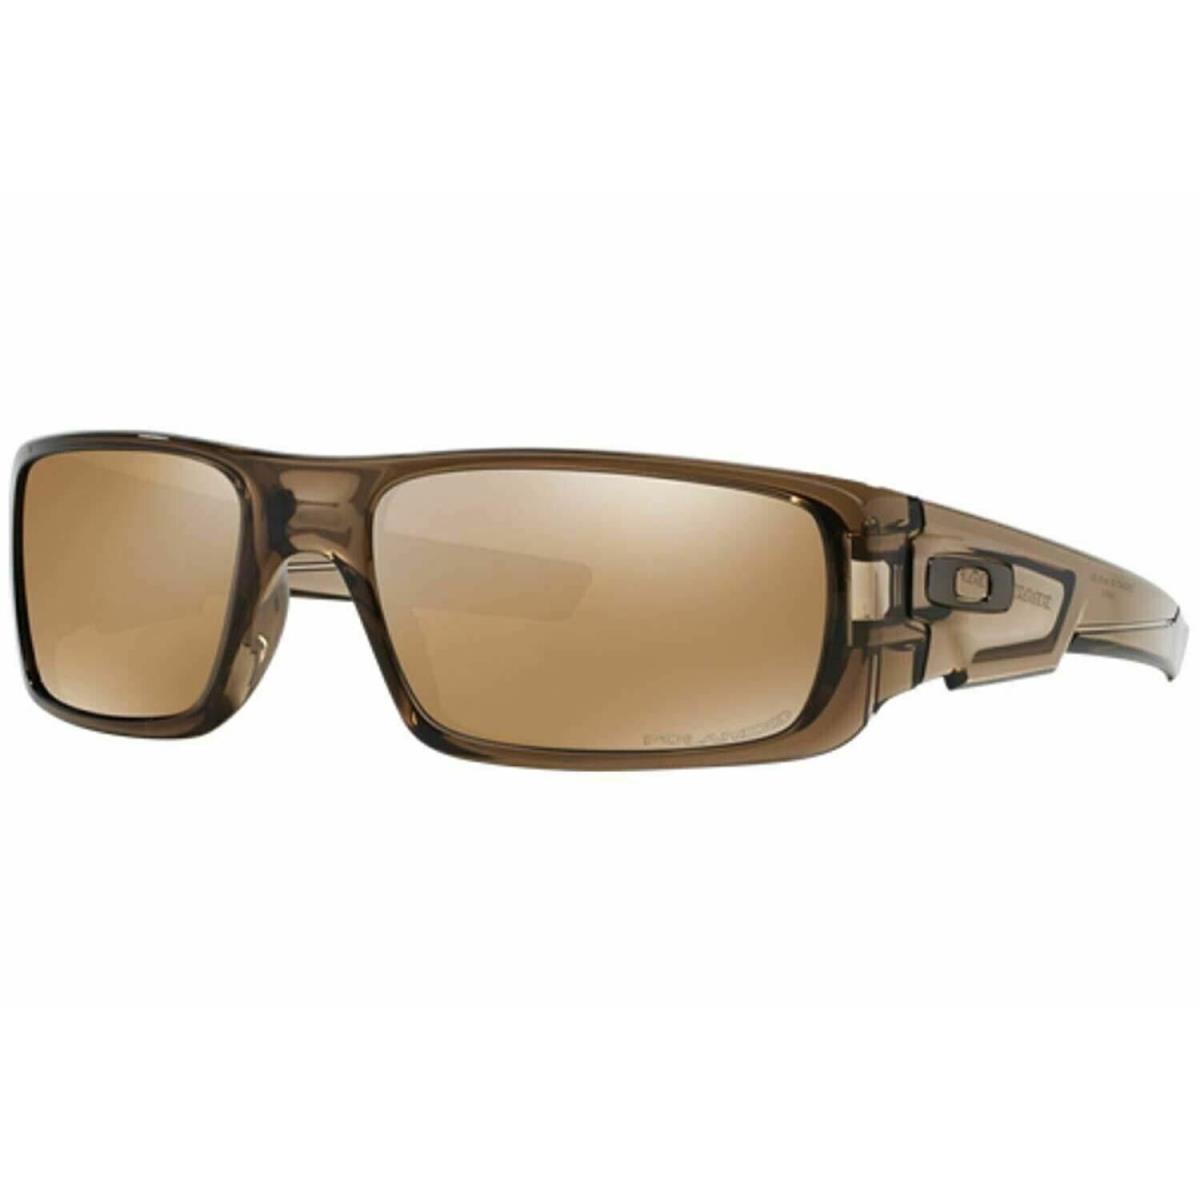 OO9239-07 Oakley Crankshaft Lens/60 Bridge/19 Temple/132 Men`s Sunglasses - Brown Frame, Brown Lens